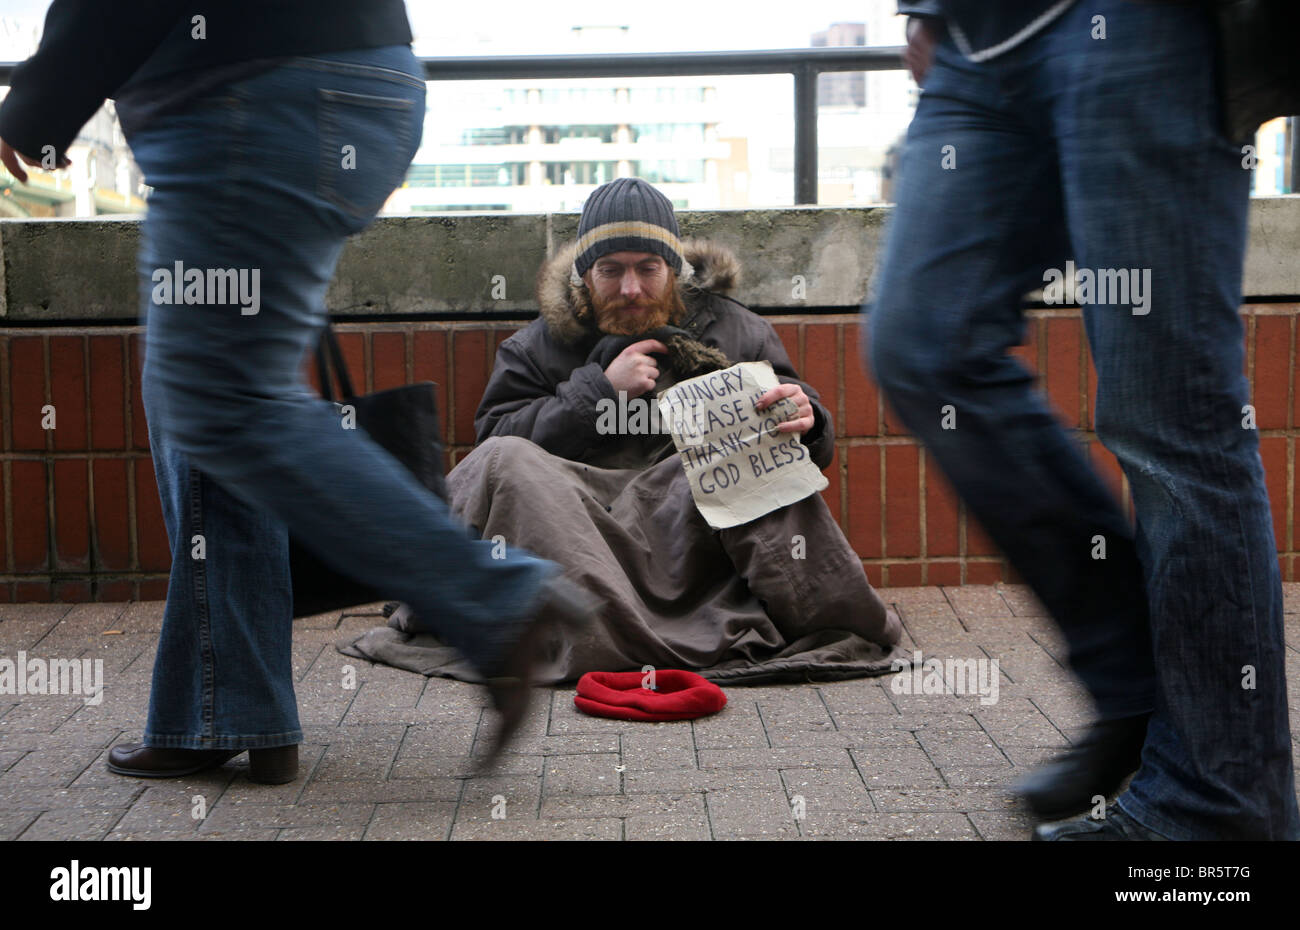 people-passing-a-homeless-man-begging-for-money-london-BR5T7G.jpg